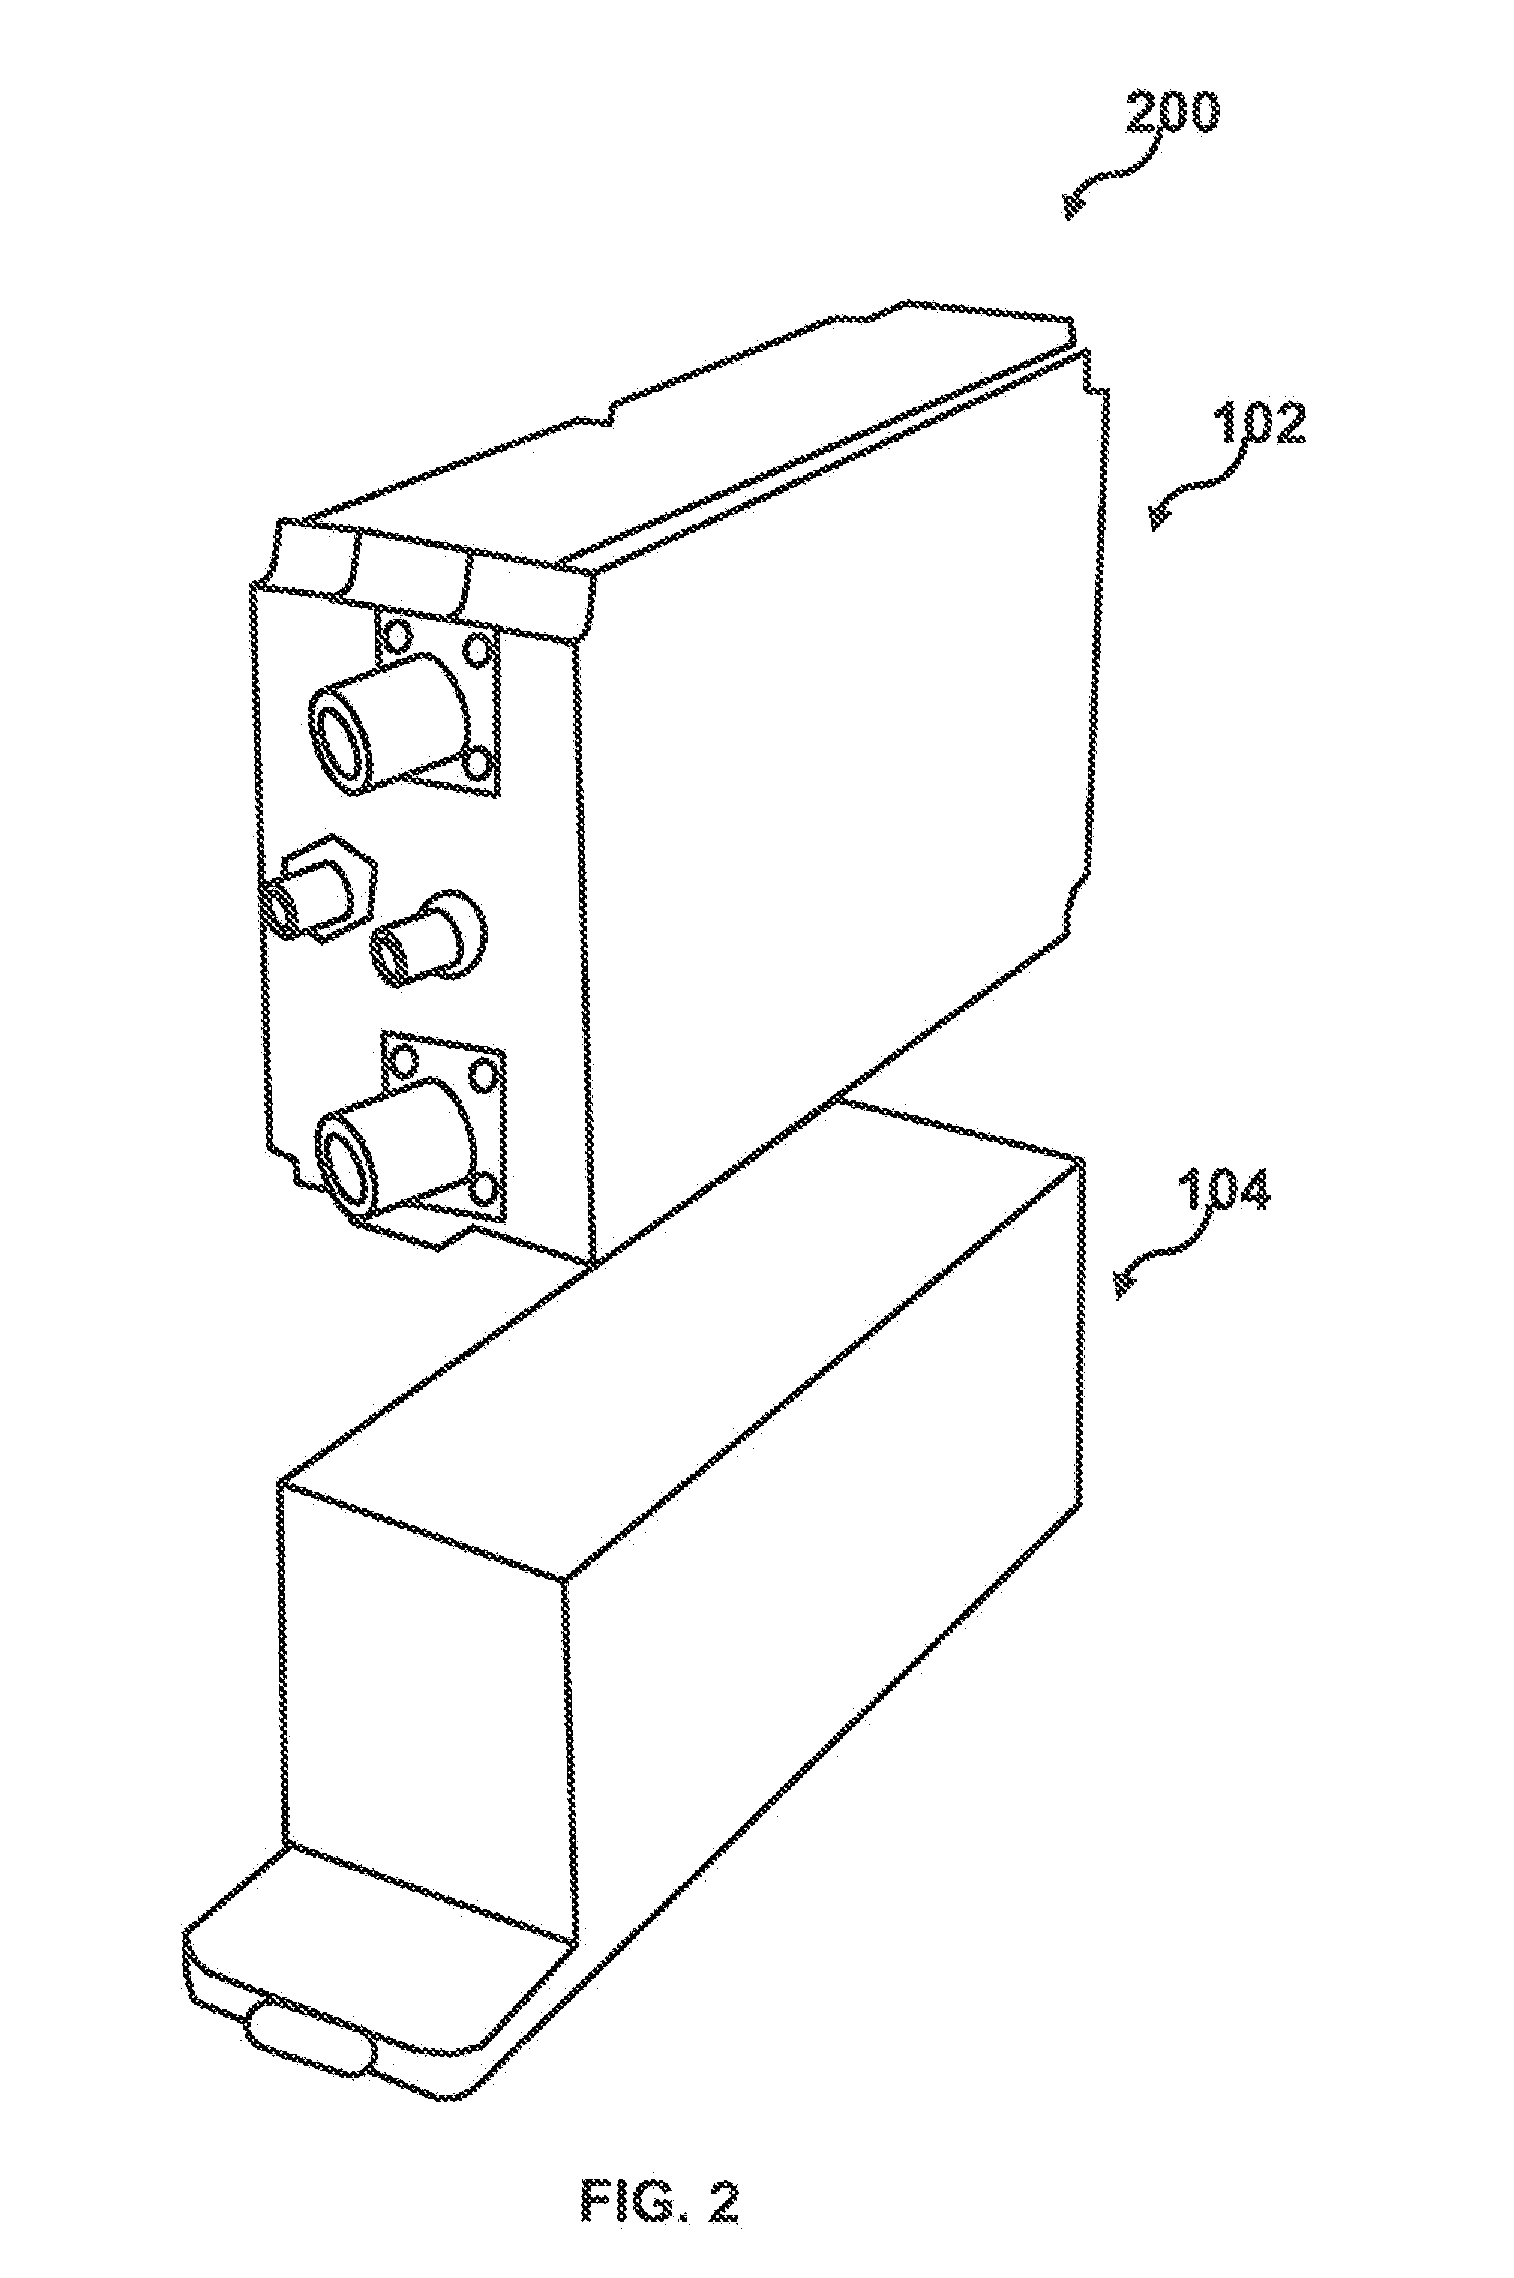 Module cooling method and plenum adaptor